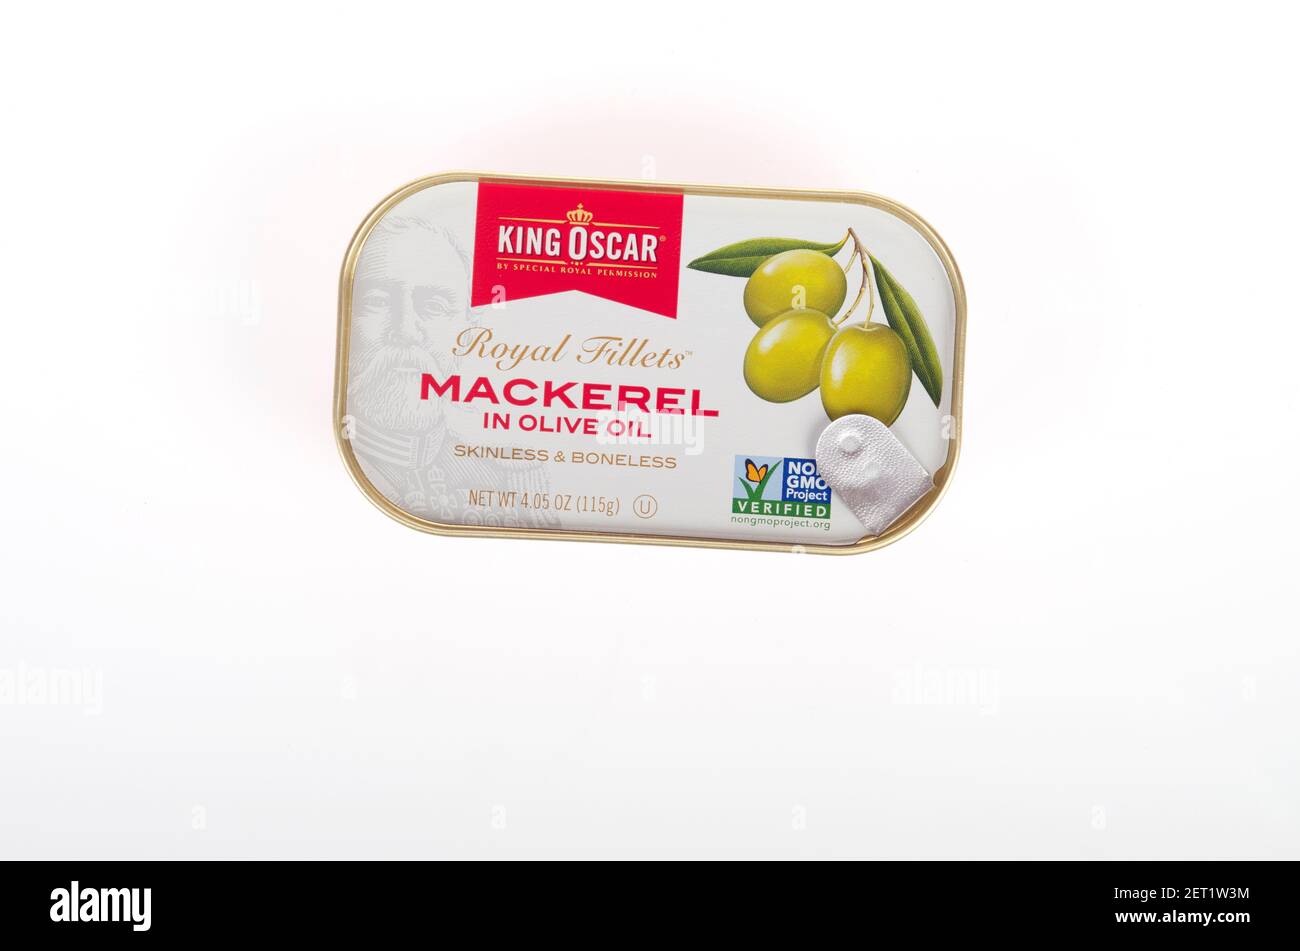 King Oscar Mackerel Fillets in Olive Oil Skinless & Boneless Tin Stock Photo